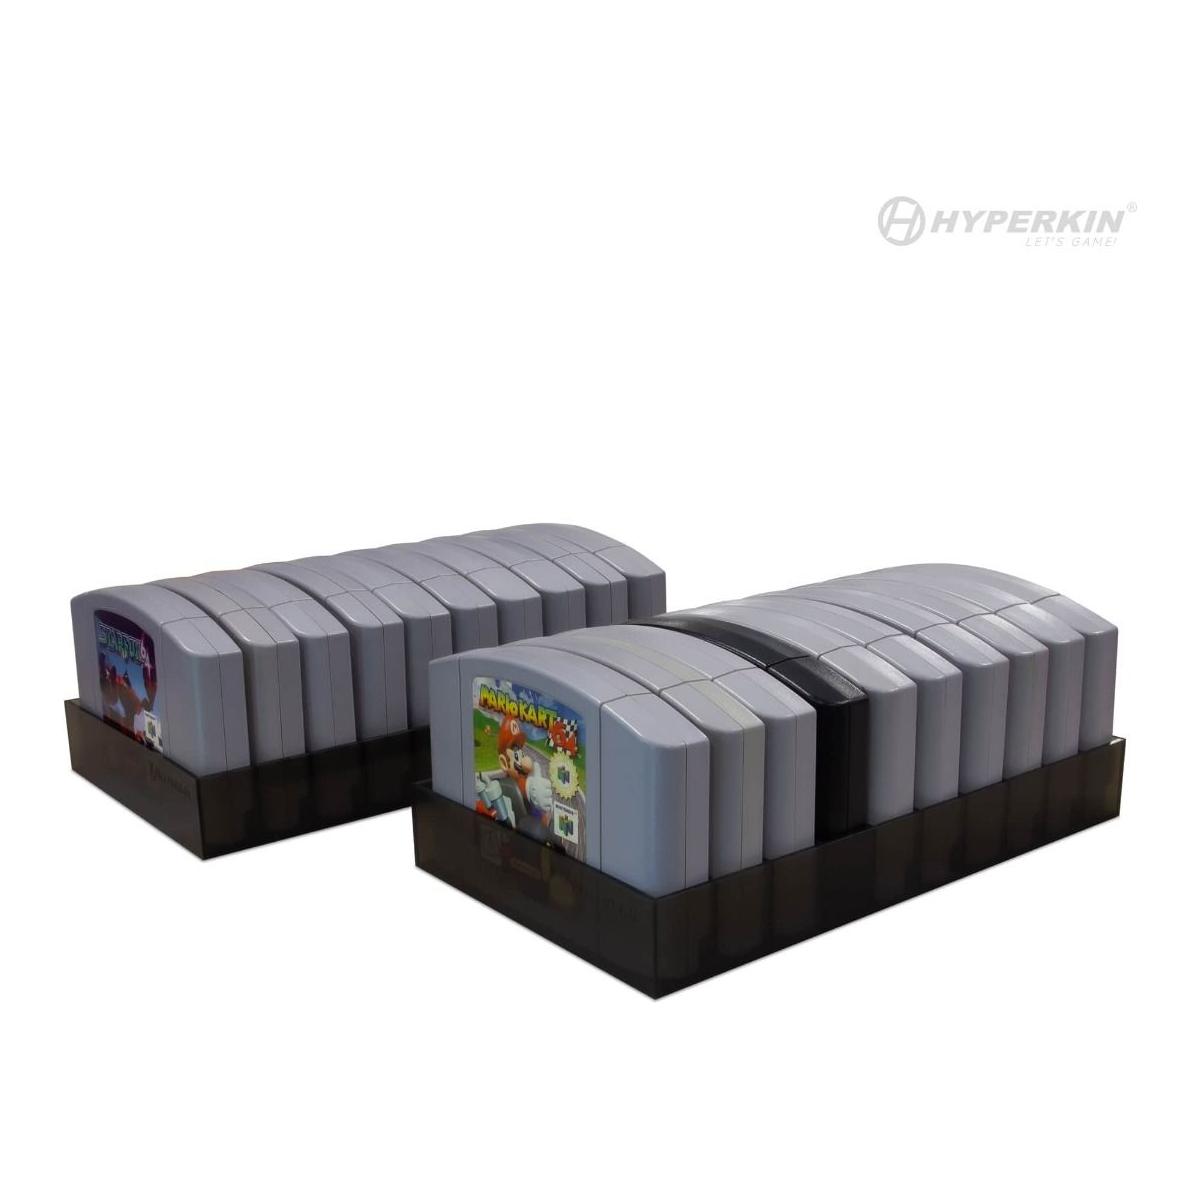 N64 10-Cartridge Storage Stand (2 Pack)